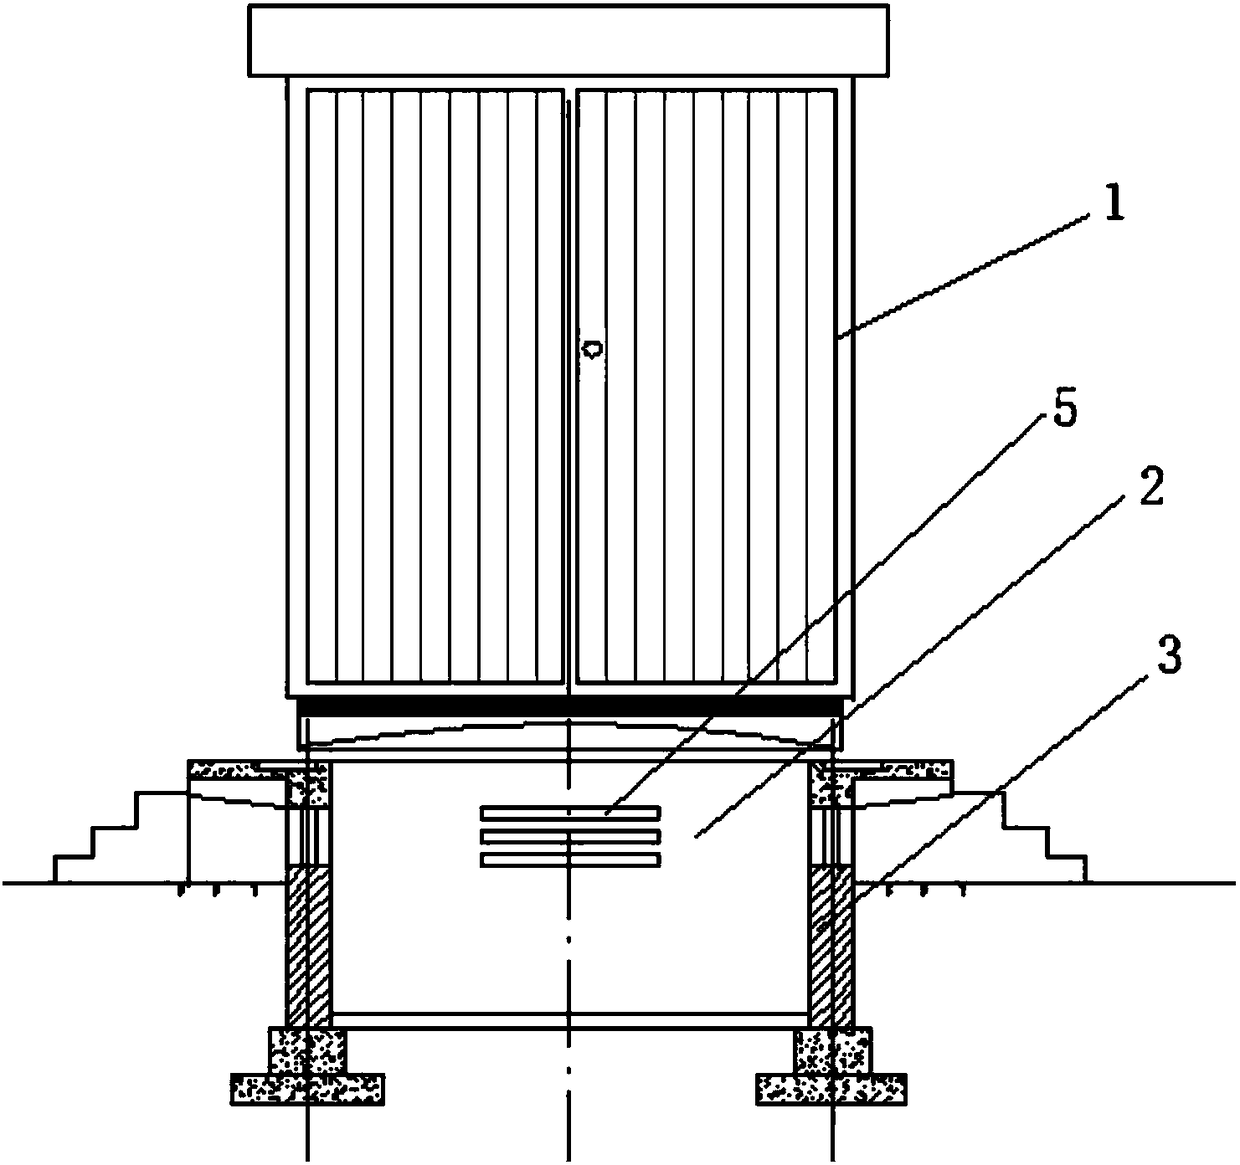 An anti-condensation box-type transformer